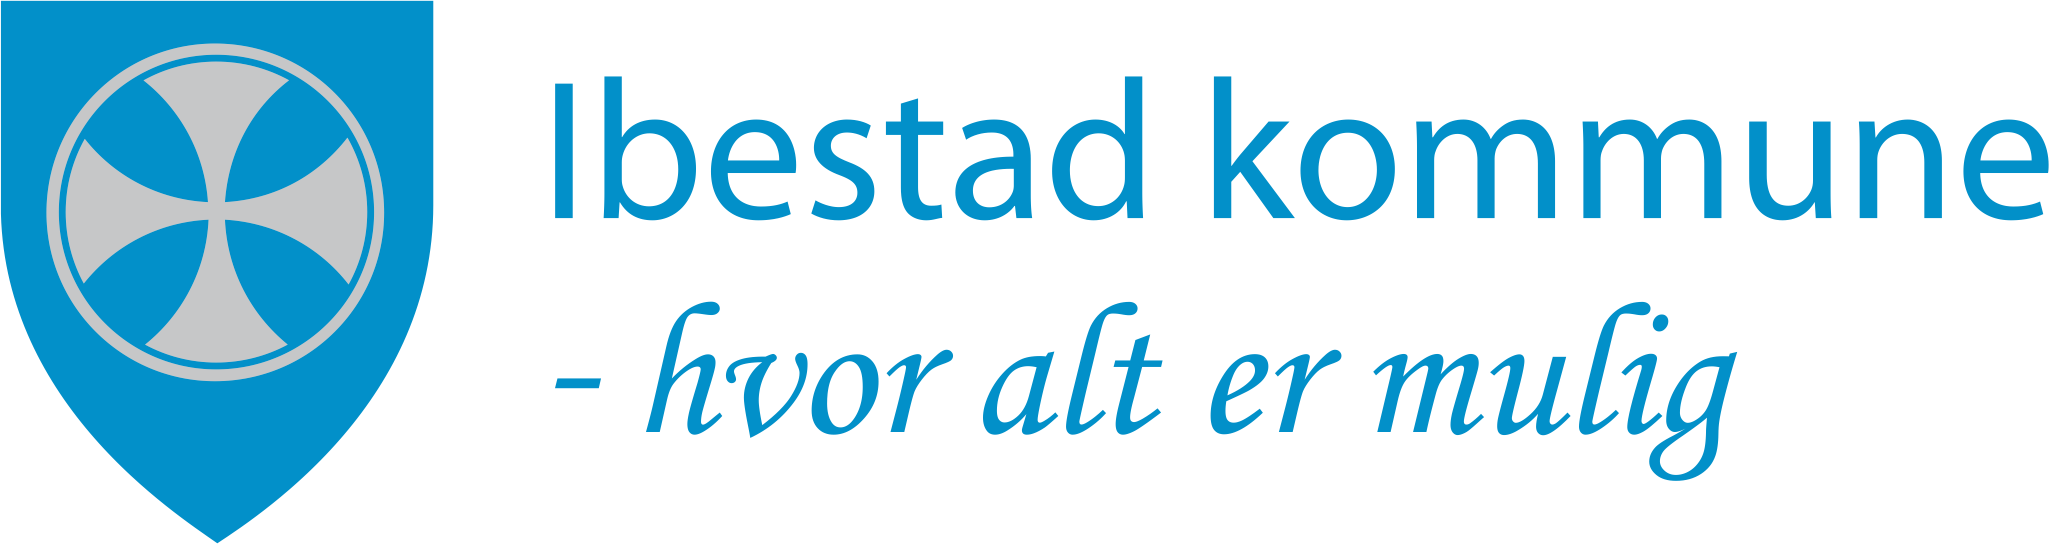 Ibestad kommune logo